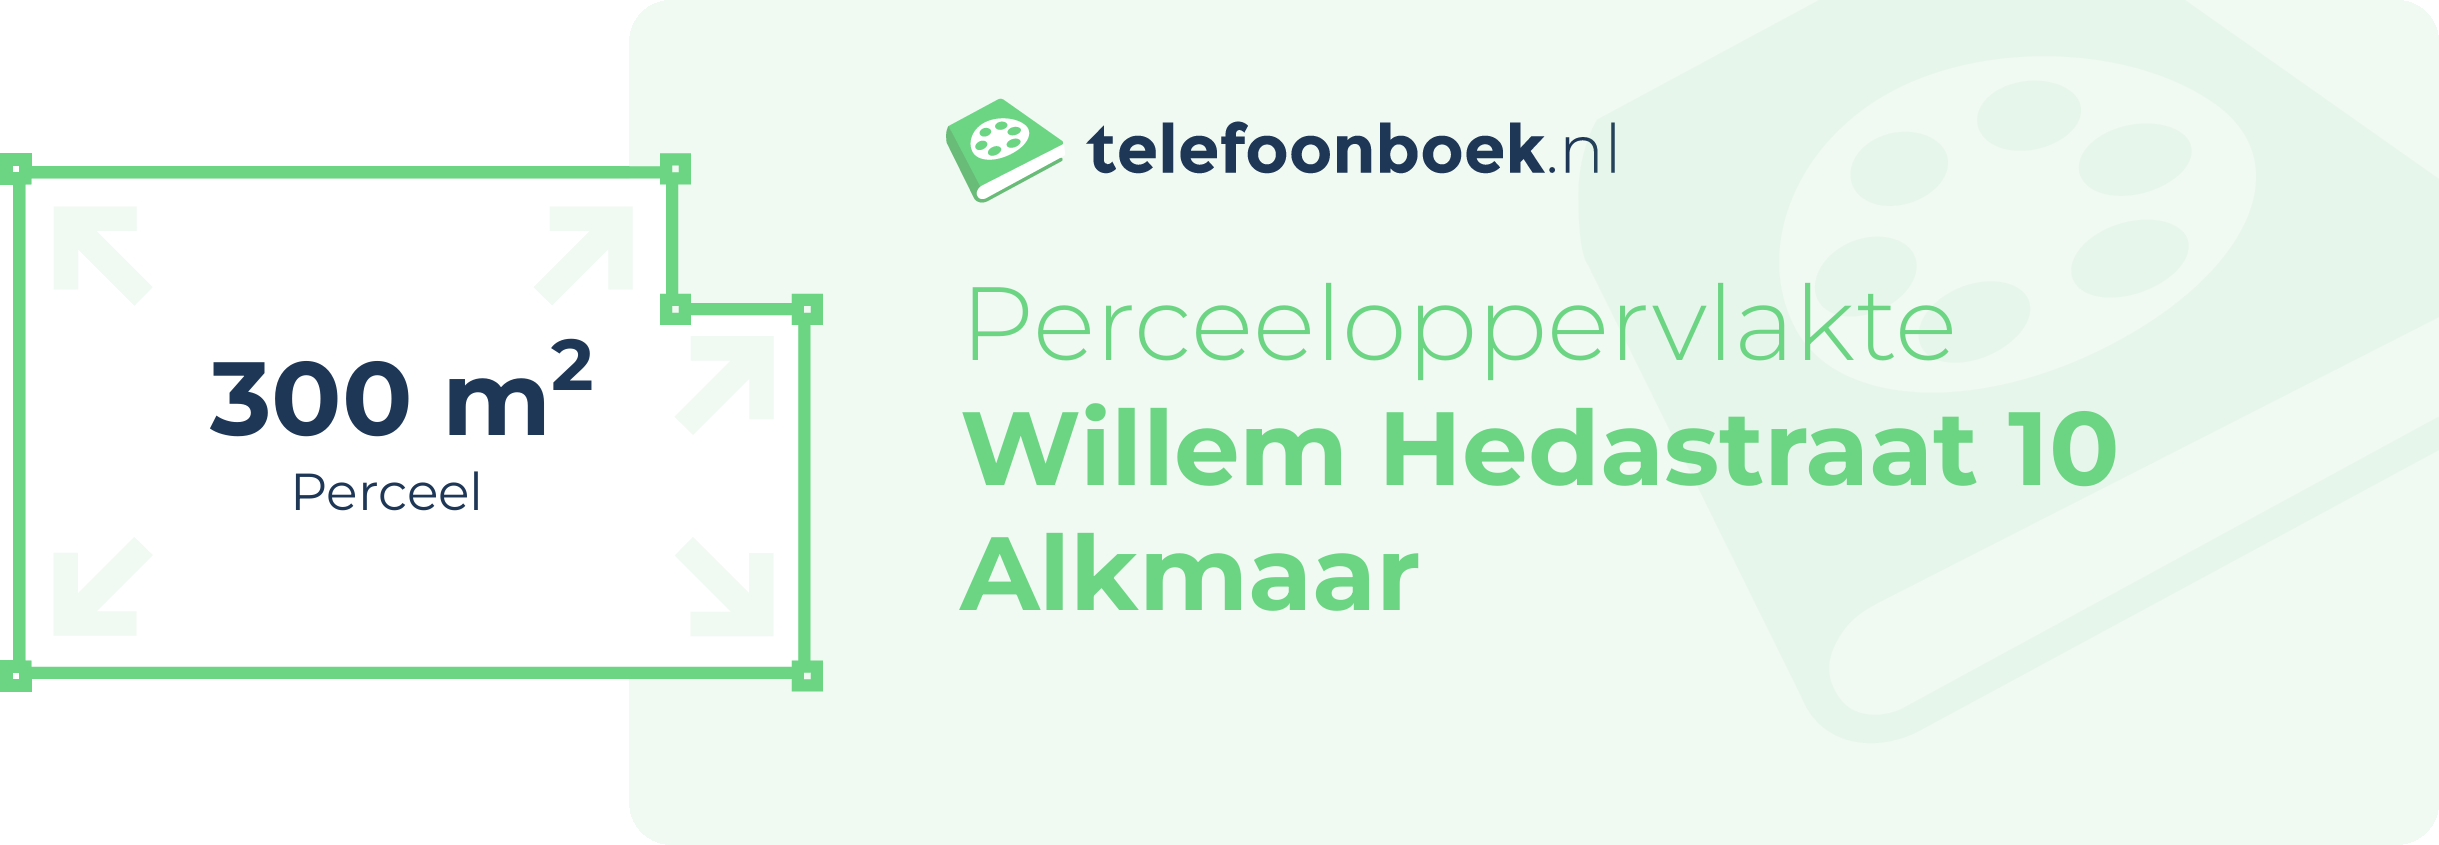 Perceeloppervlakte Willem Hedastraat 10 Alkmaar